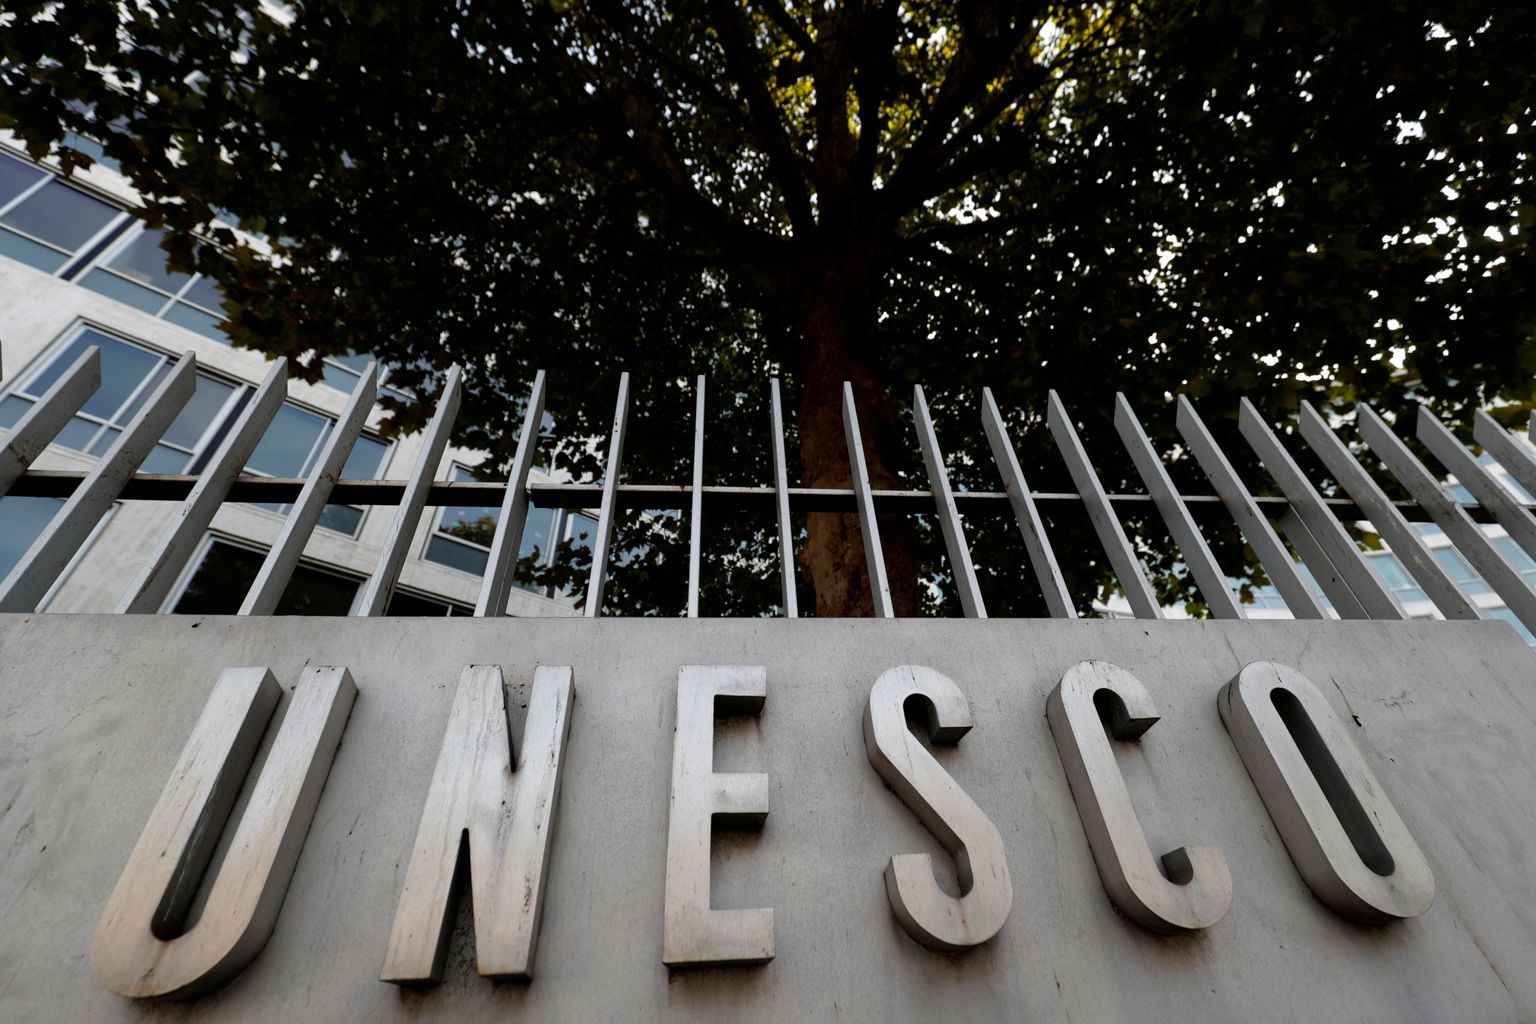 UNESCO logo organisatsiooni Pariisis asuva peakontori ees.